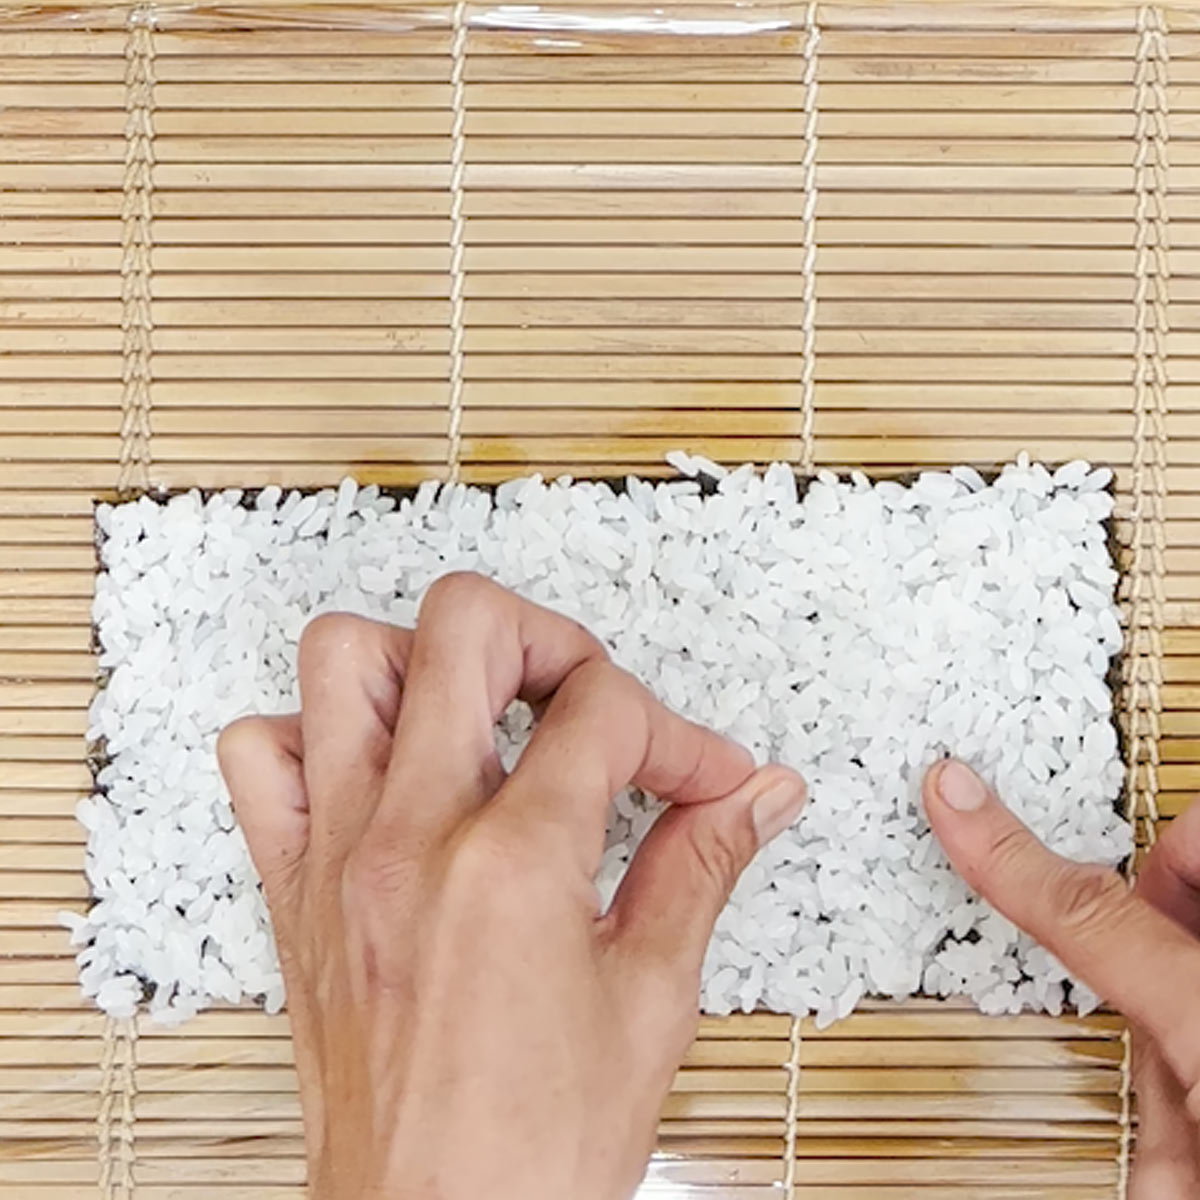 stick rice on nori for outer uramaki layer